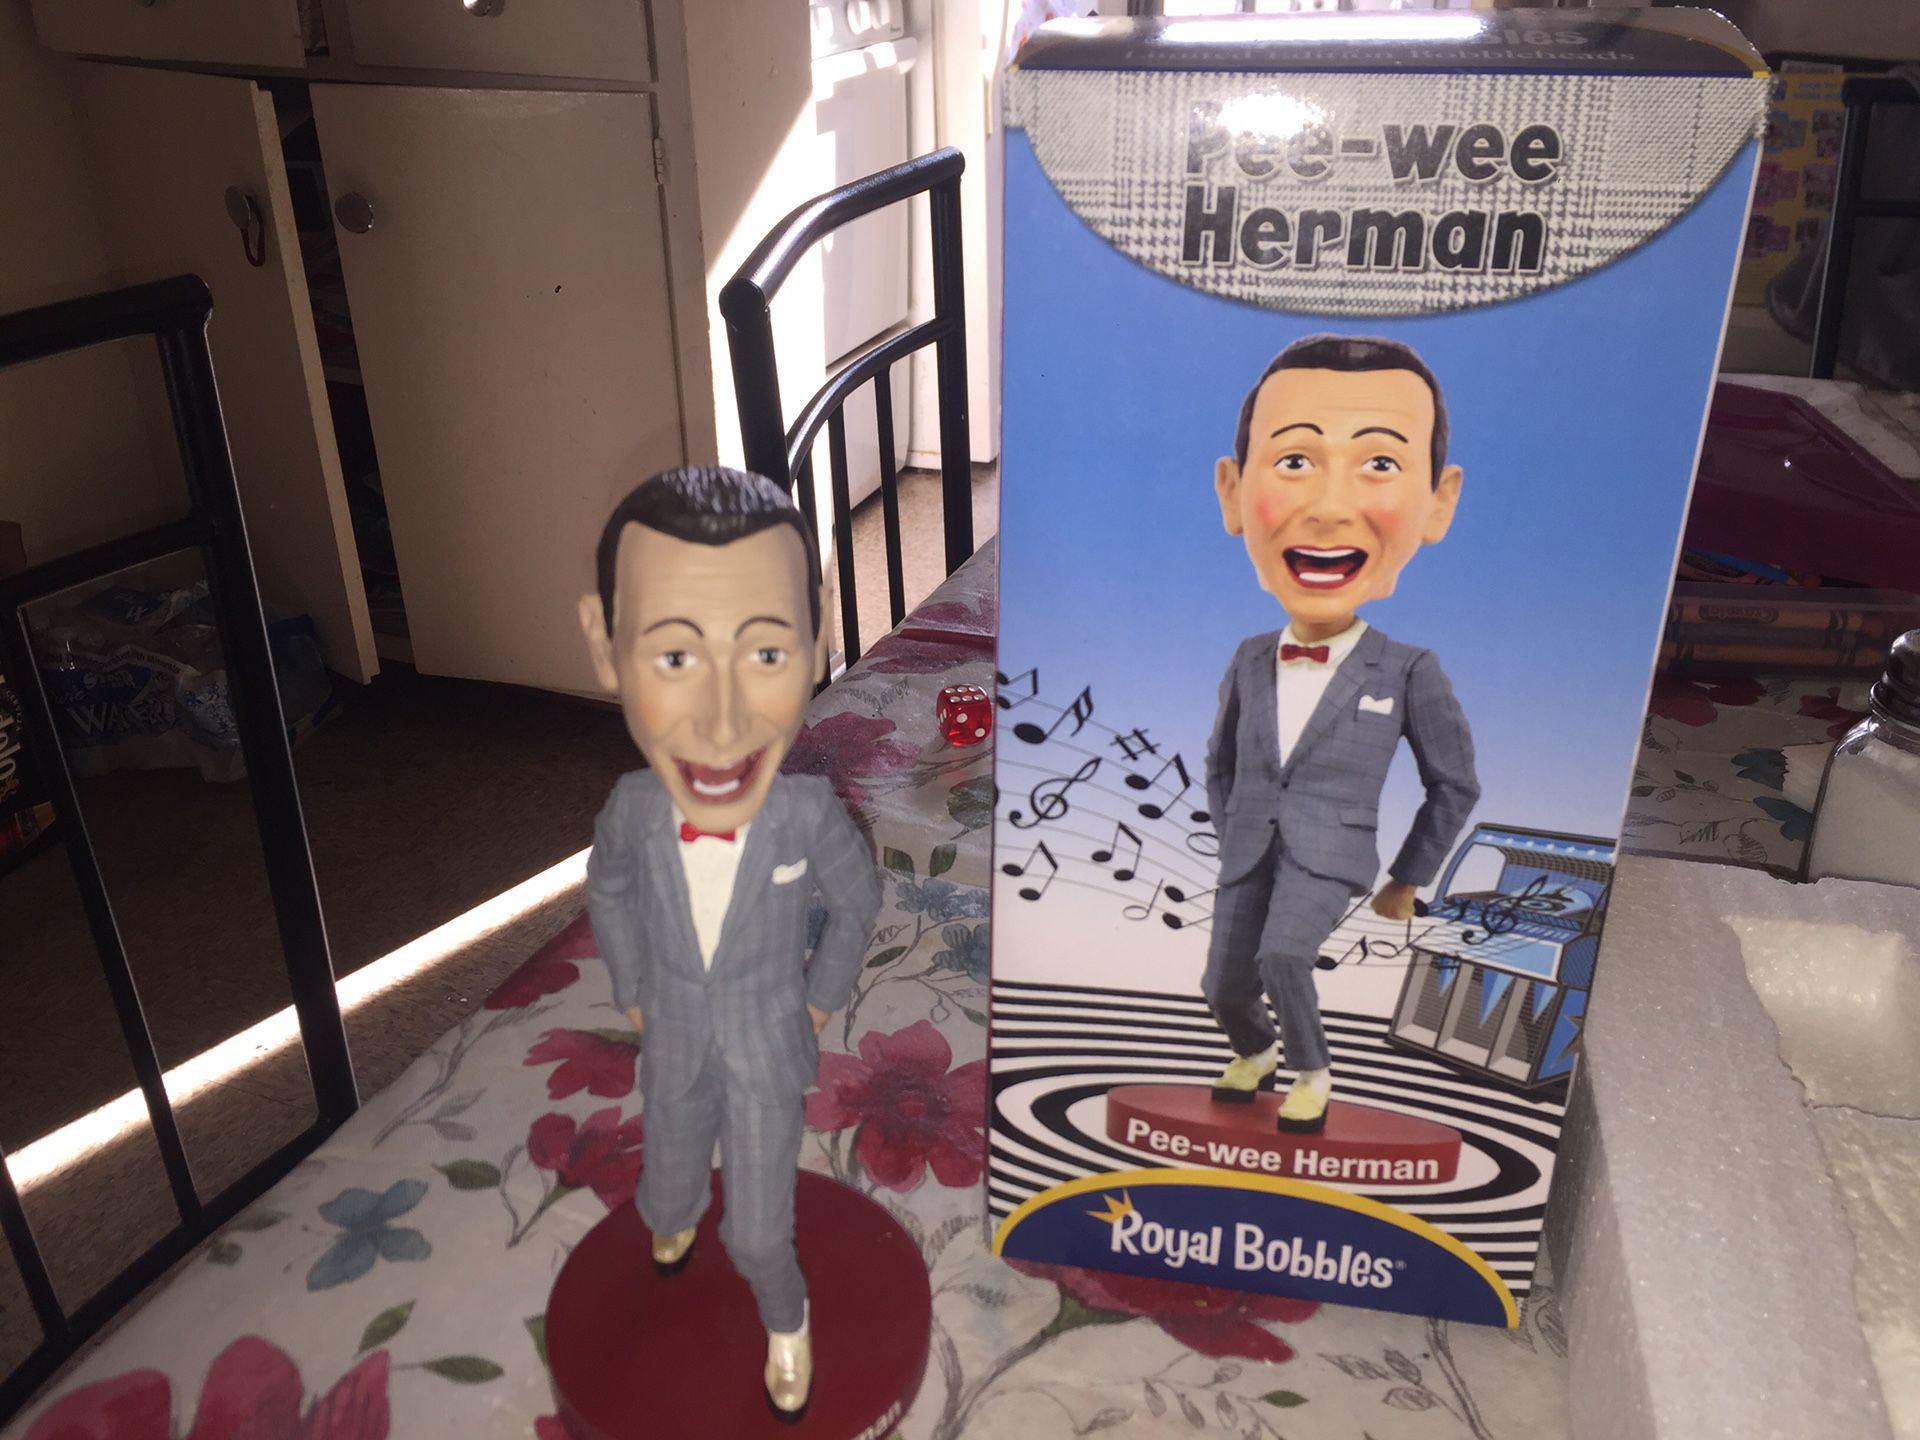 Royal Bobbles Pee-wee Herman Bobblehead